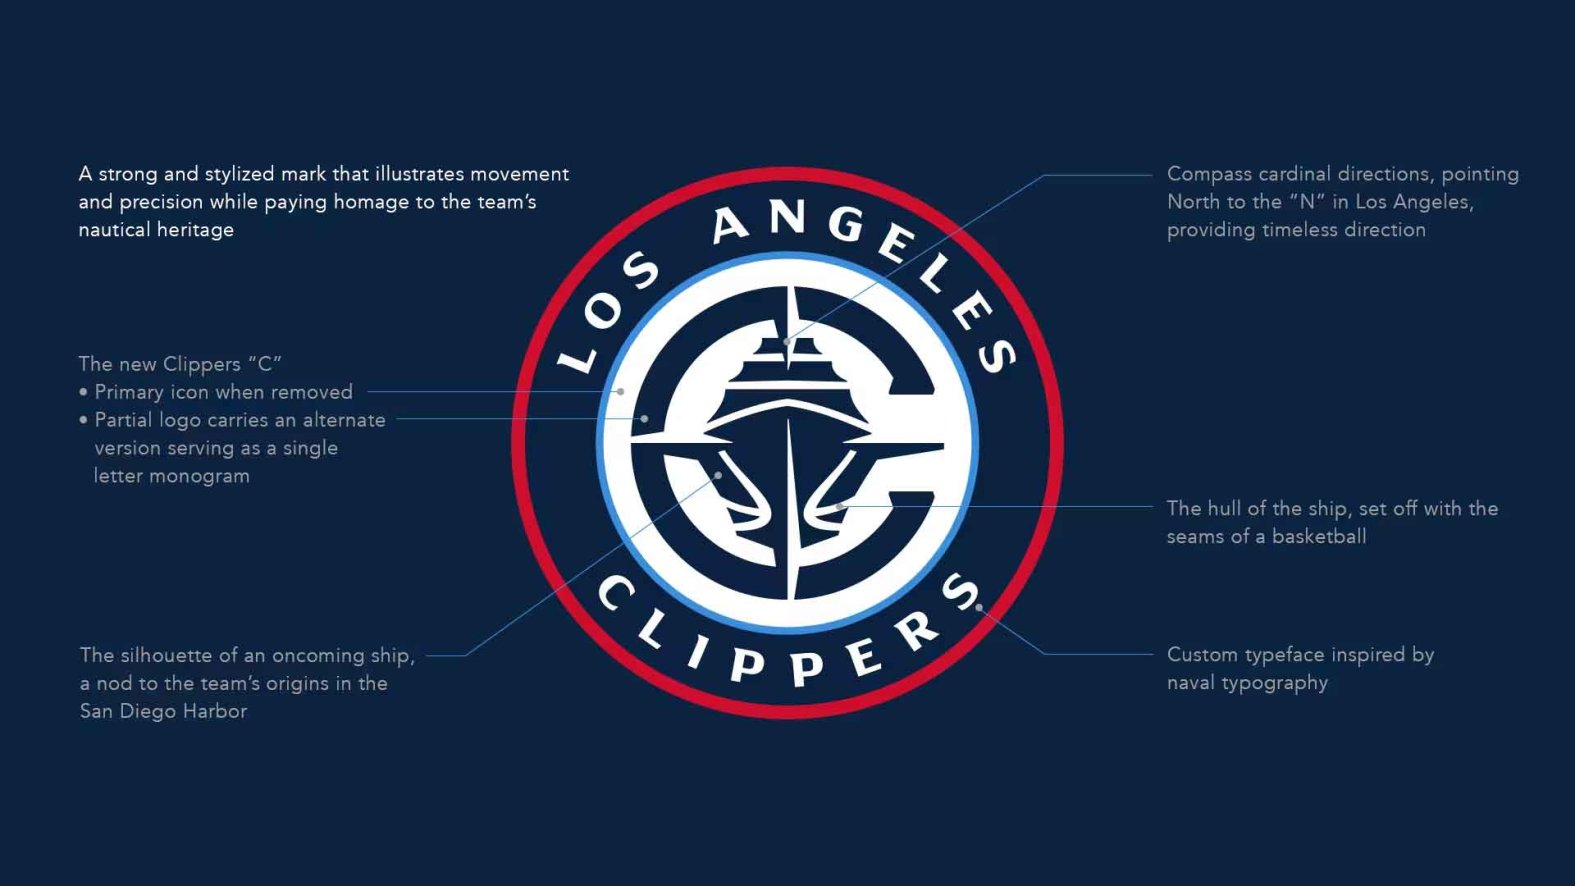 LA Clippers unveil new uniforms, logo and court for 202425 NBC 5